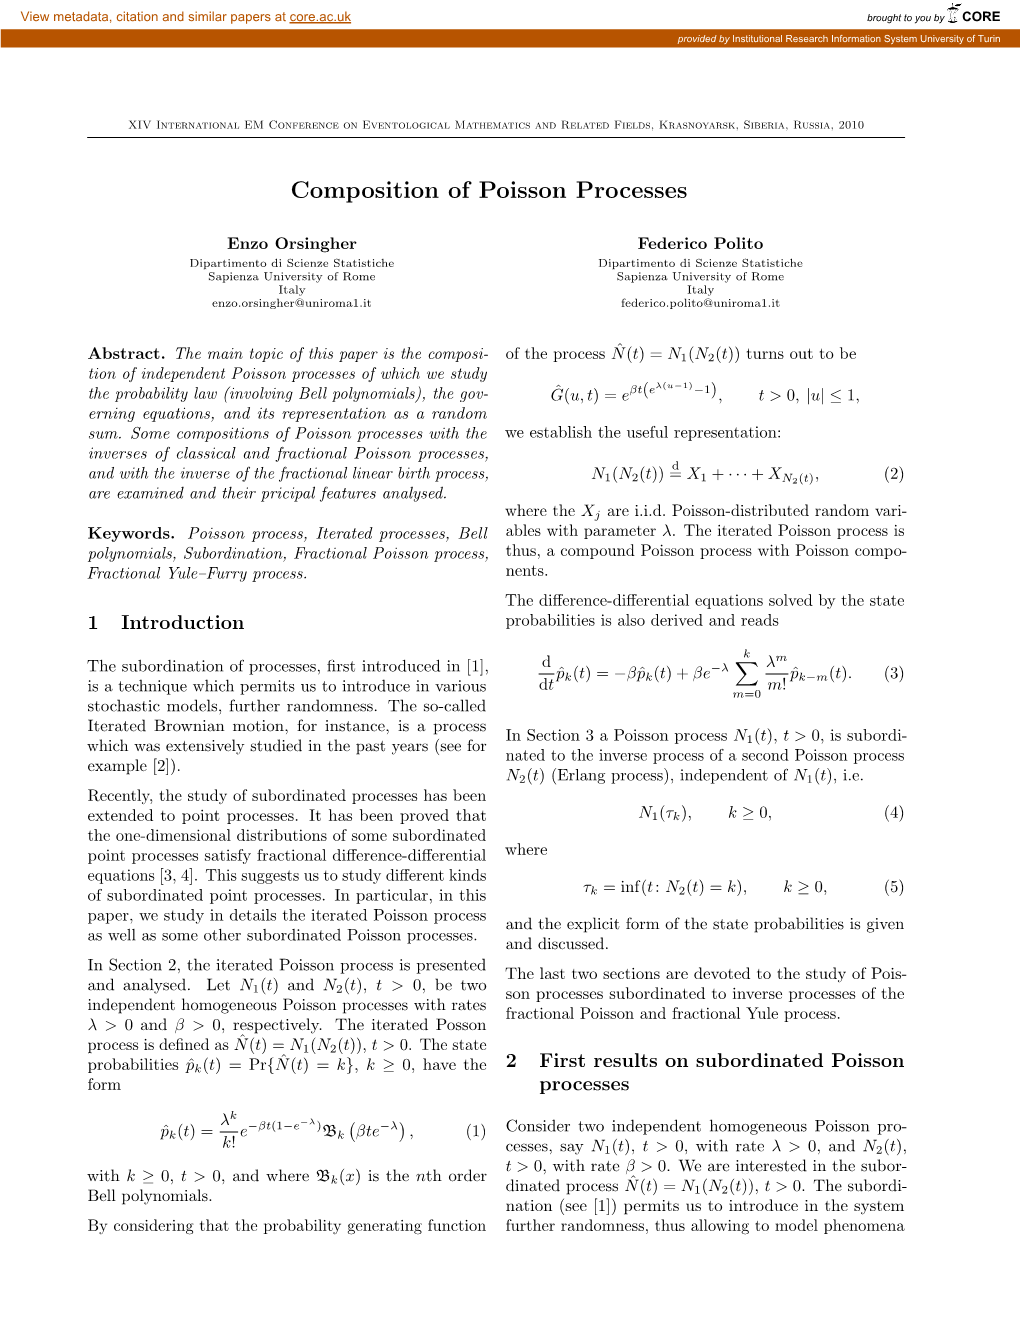 Composition of Poisson Processes